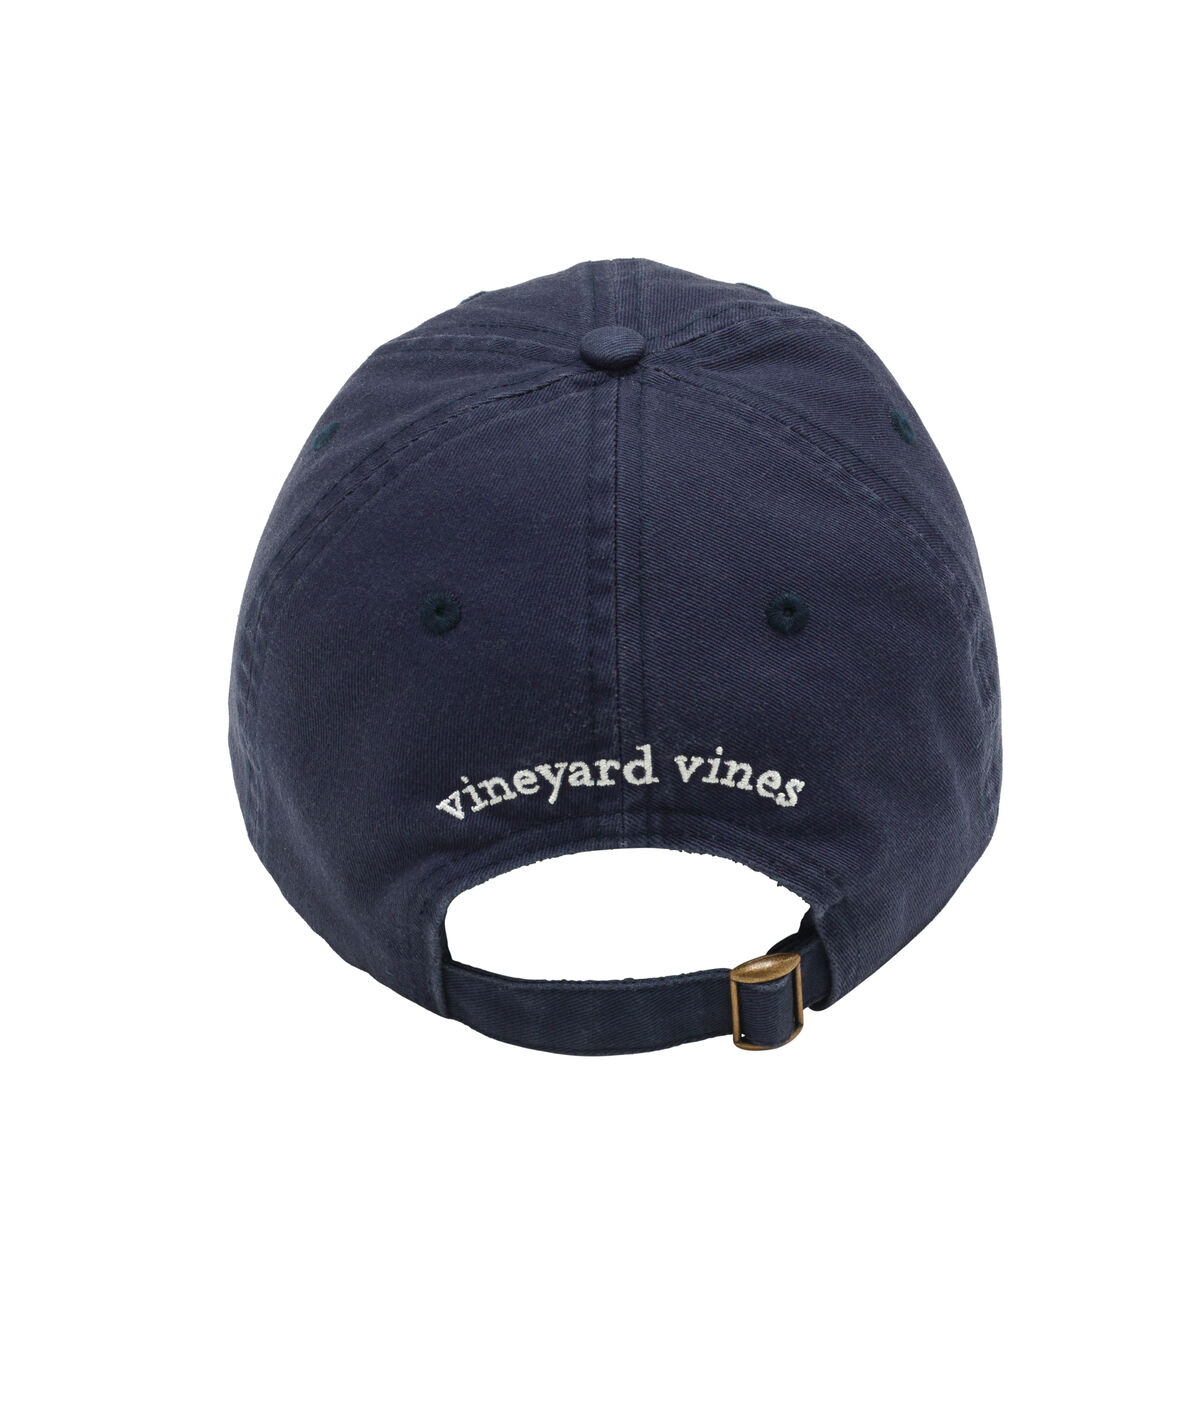 Shop Signature Whale Logo Baseball Hat at vineyard vines